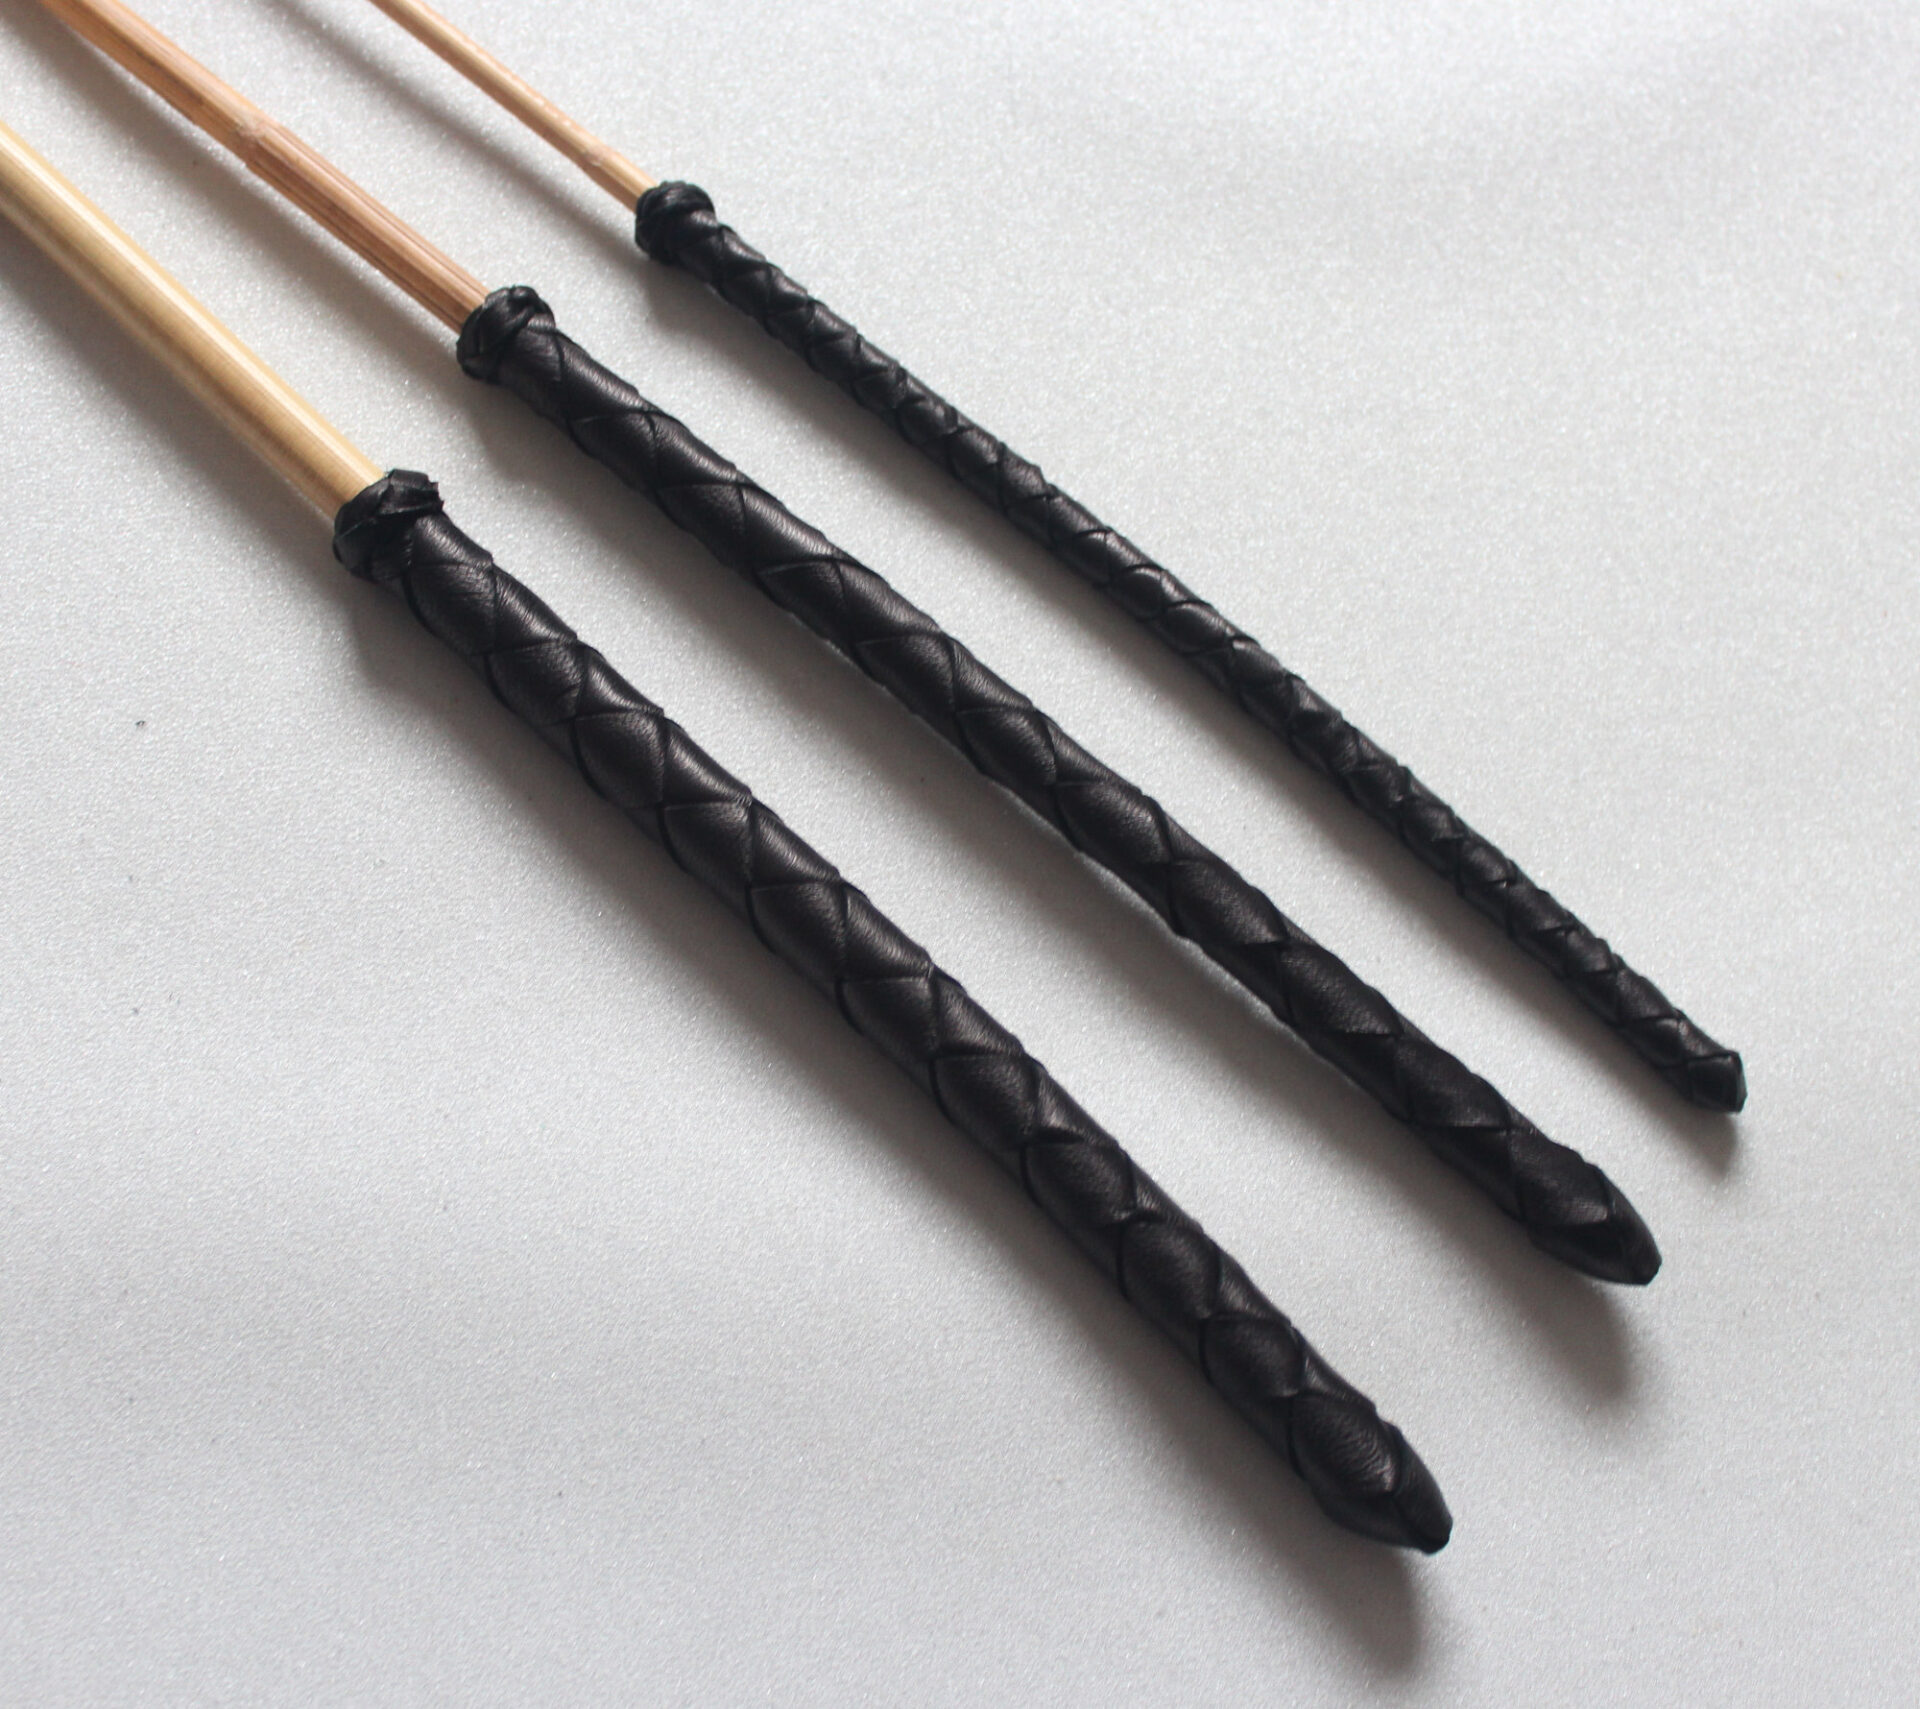 Kooboo cane set with braided leather handles